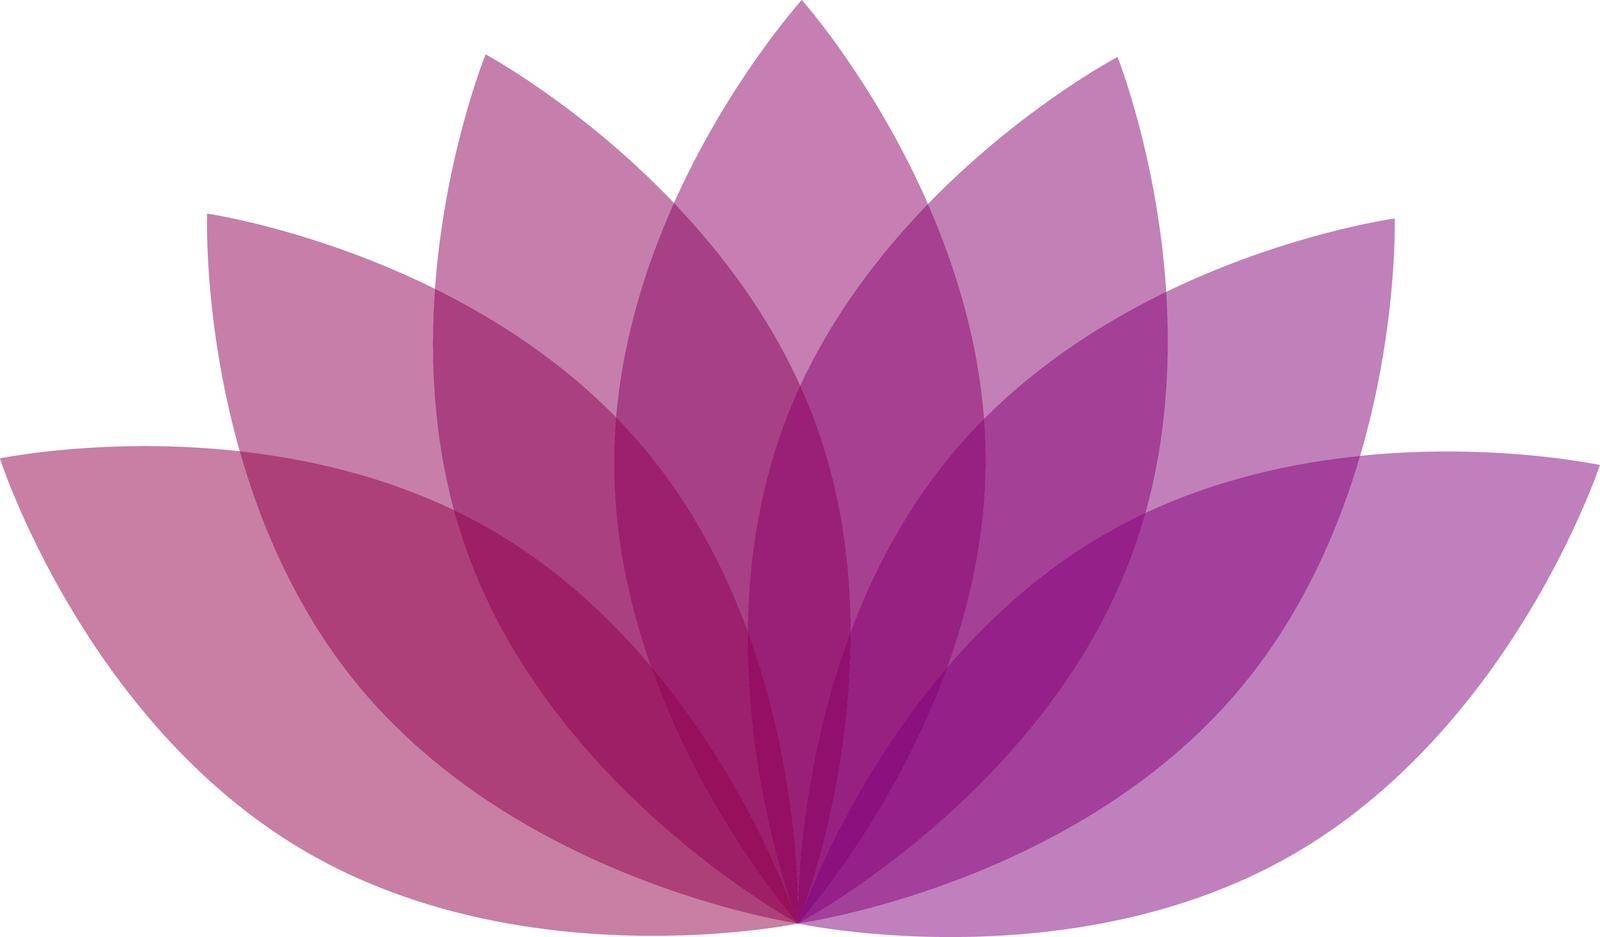 Spiritual flower logo. Mystic asian lotus plant isolated on white background